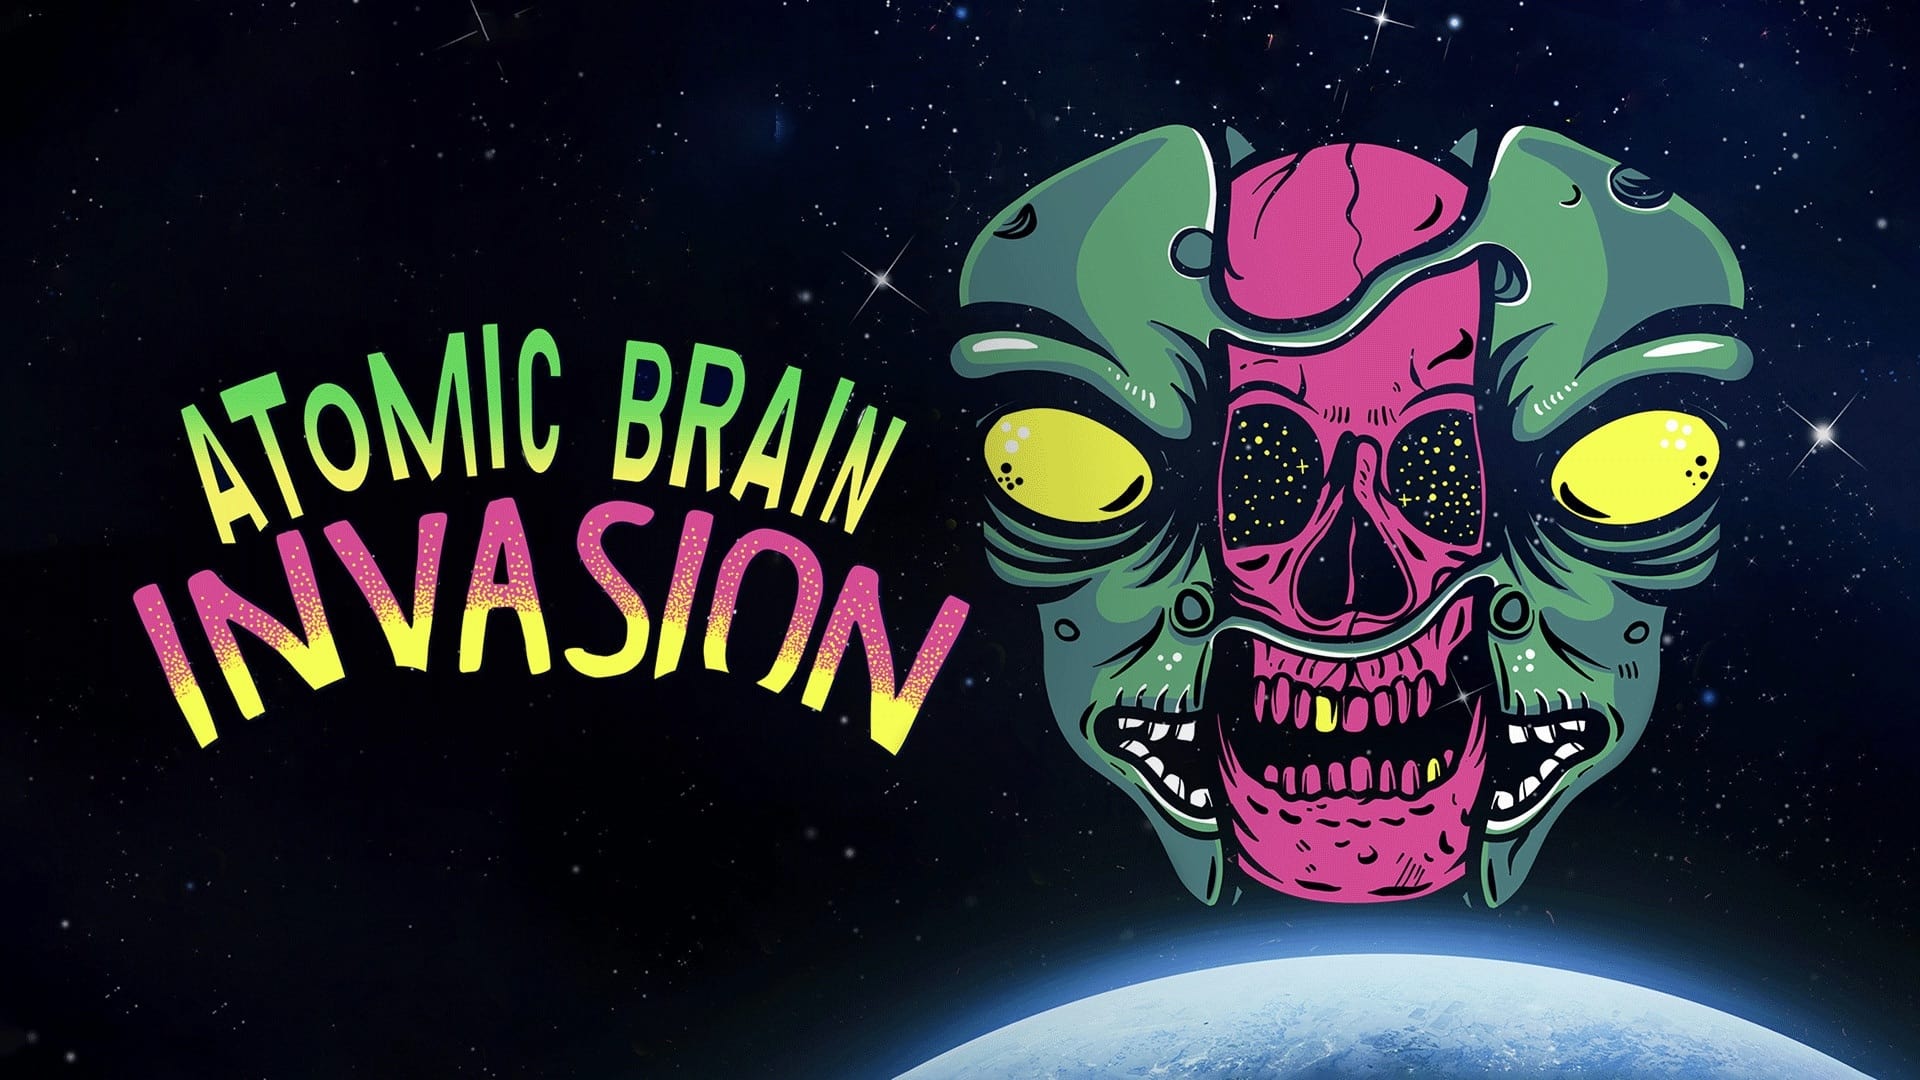 Atomic Brain Invasion (2010)